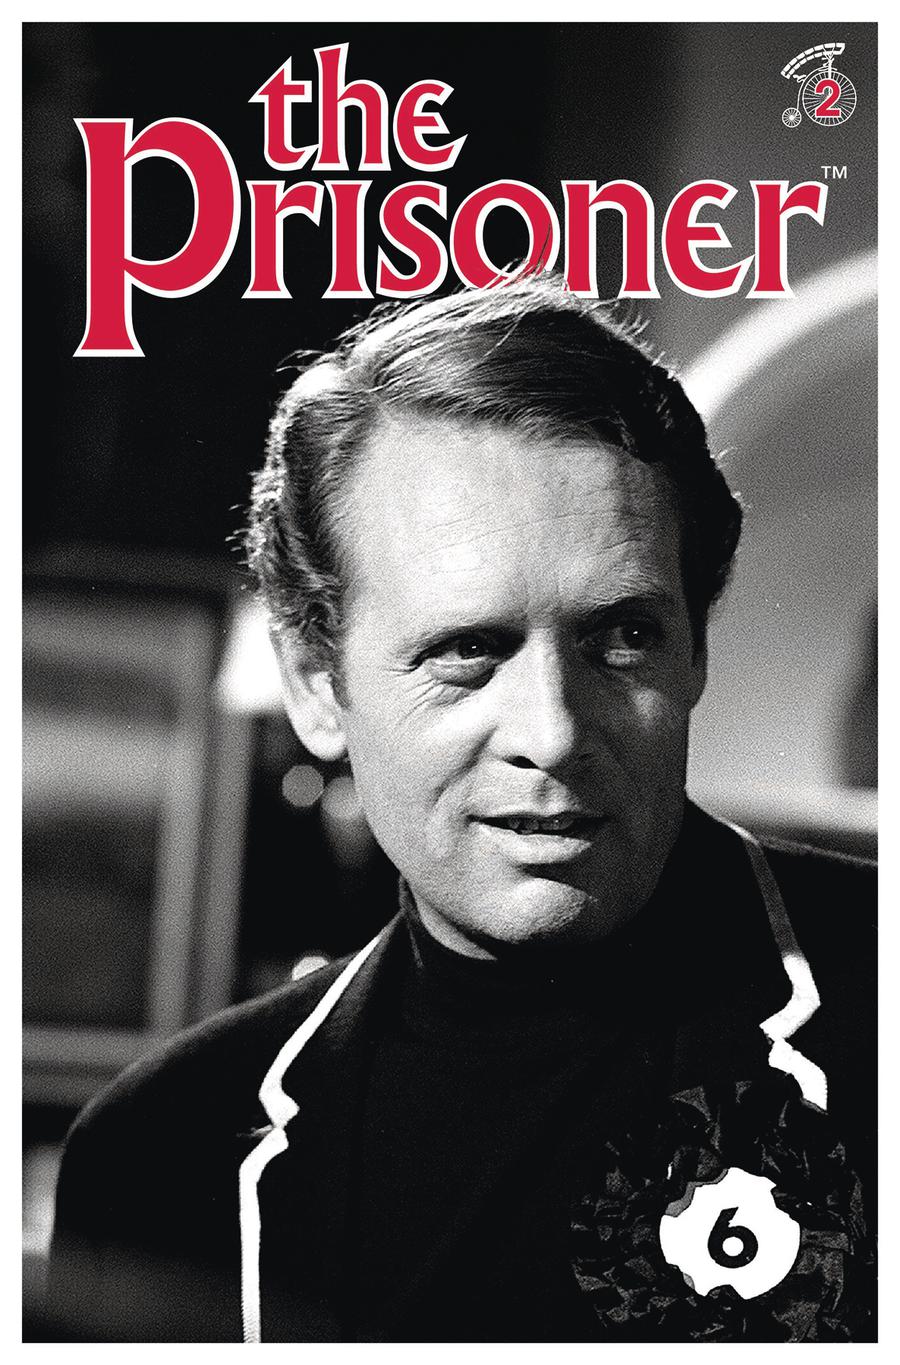 Prisoner Vol 2 #2 Cover B Variant Photo Cover